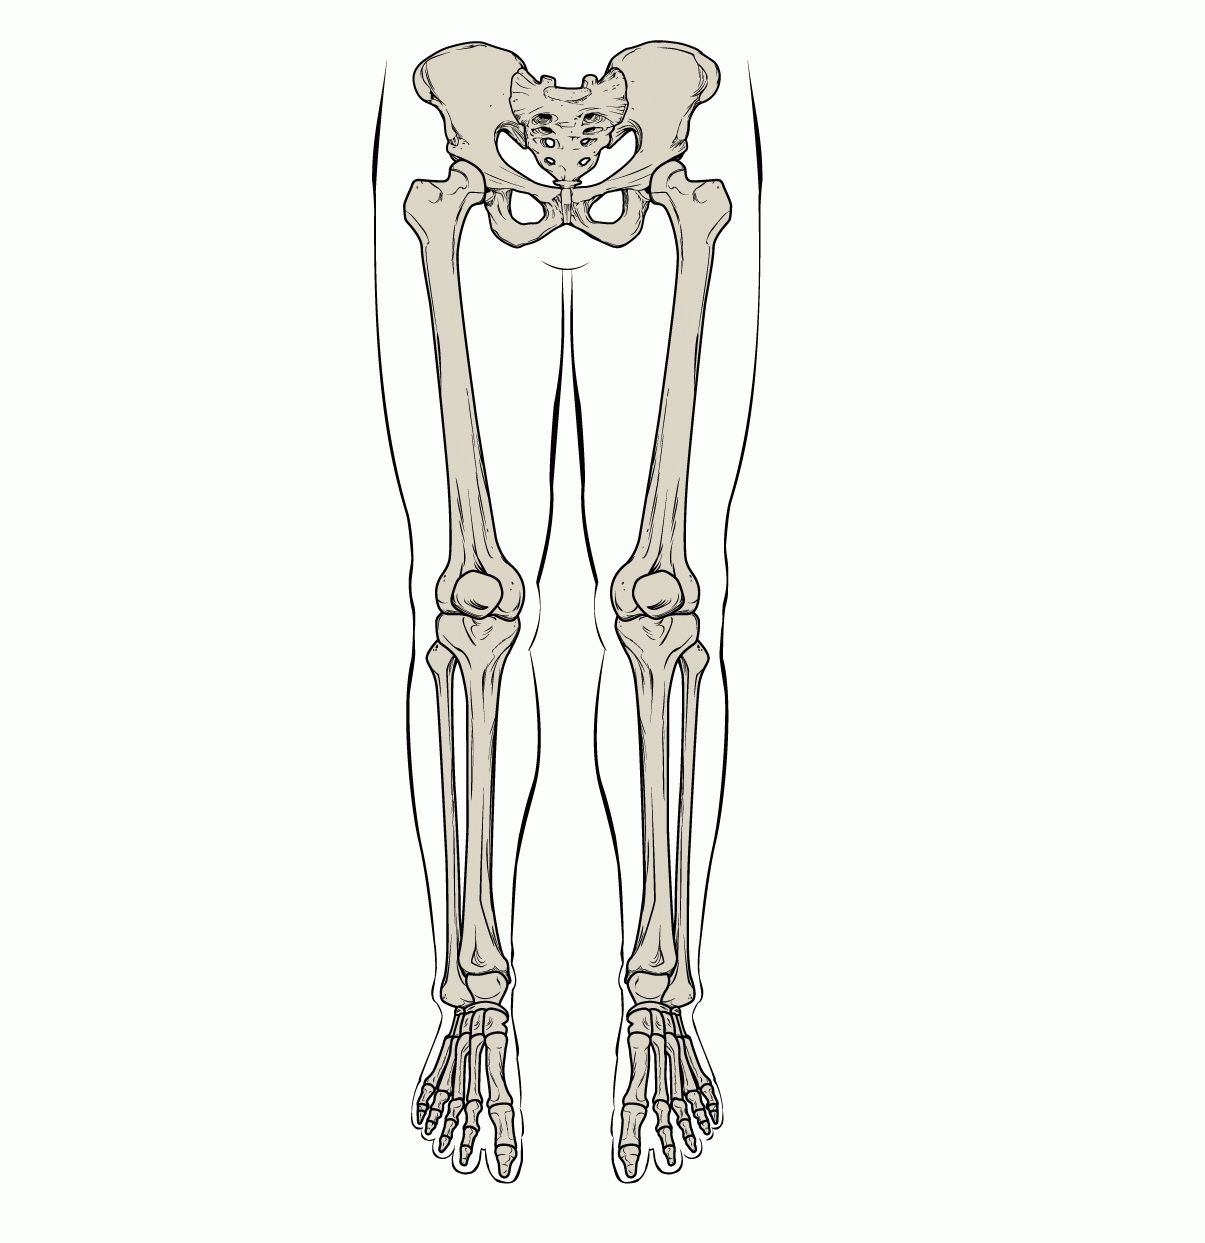 Нижние конечности тела. Скелет ноги. Скелет ноги человека. Кости таза и ног. Ножки скелета.